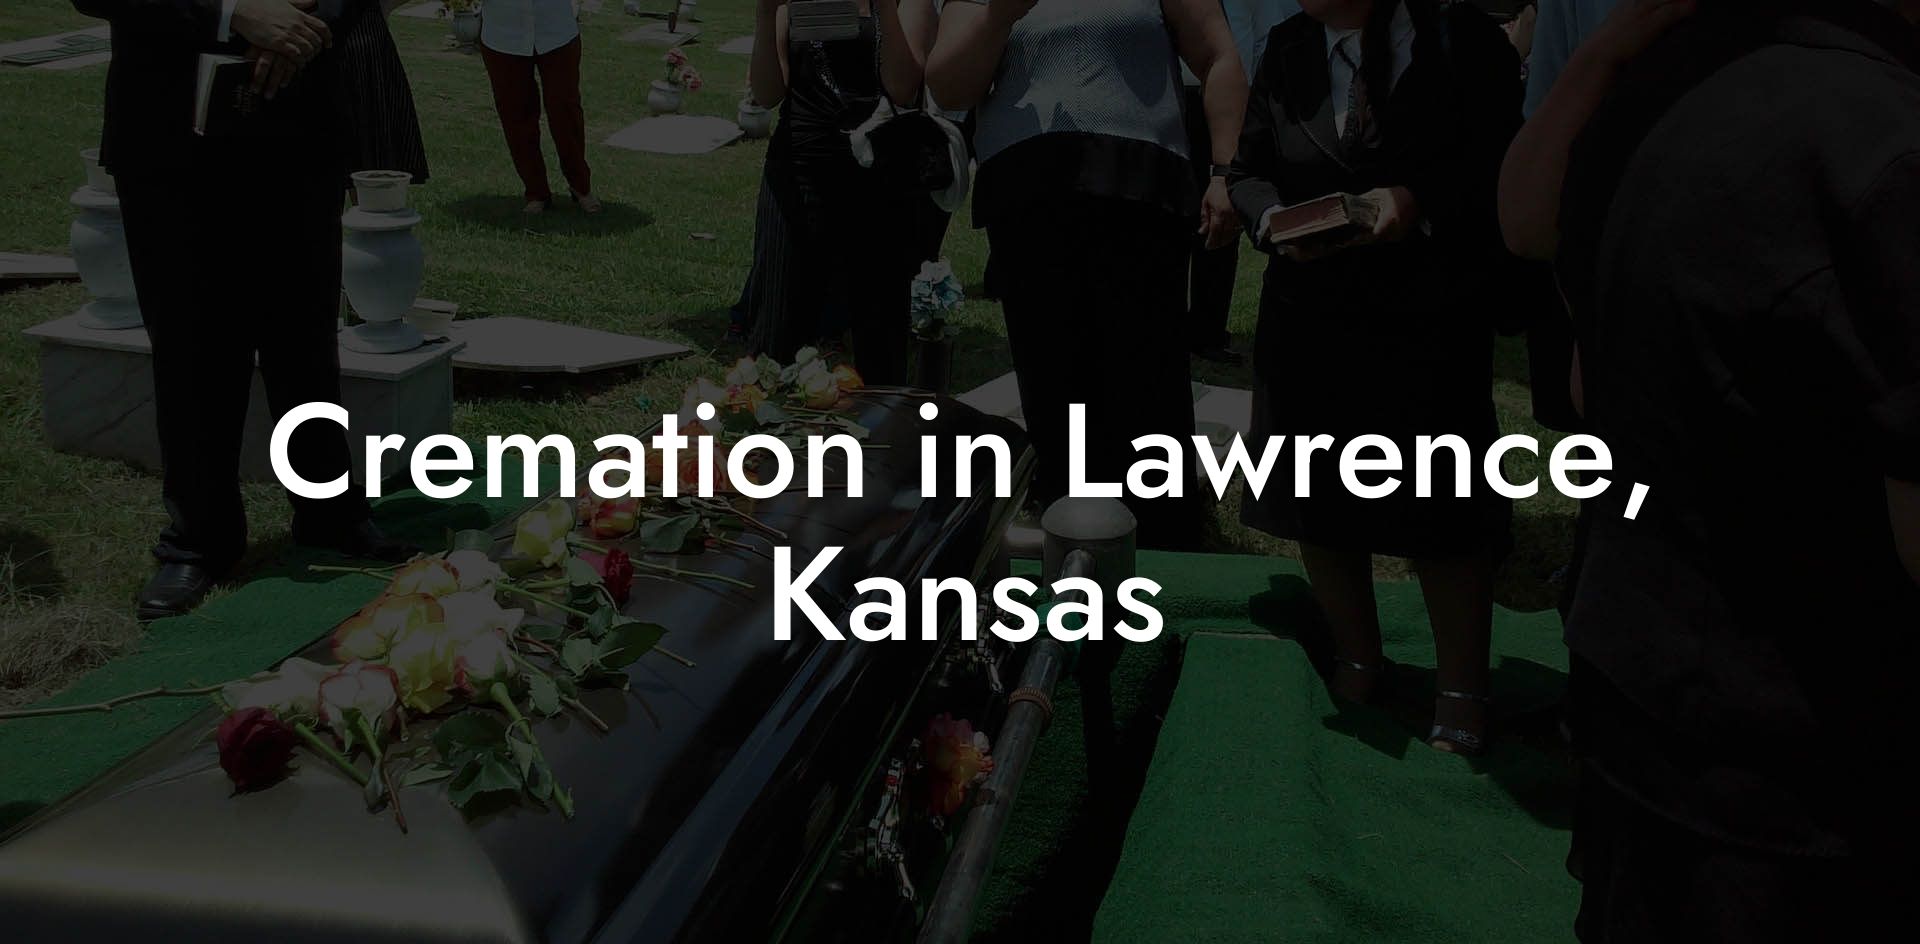 Cremation in Lawrence, Kansas